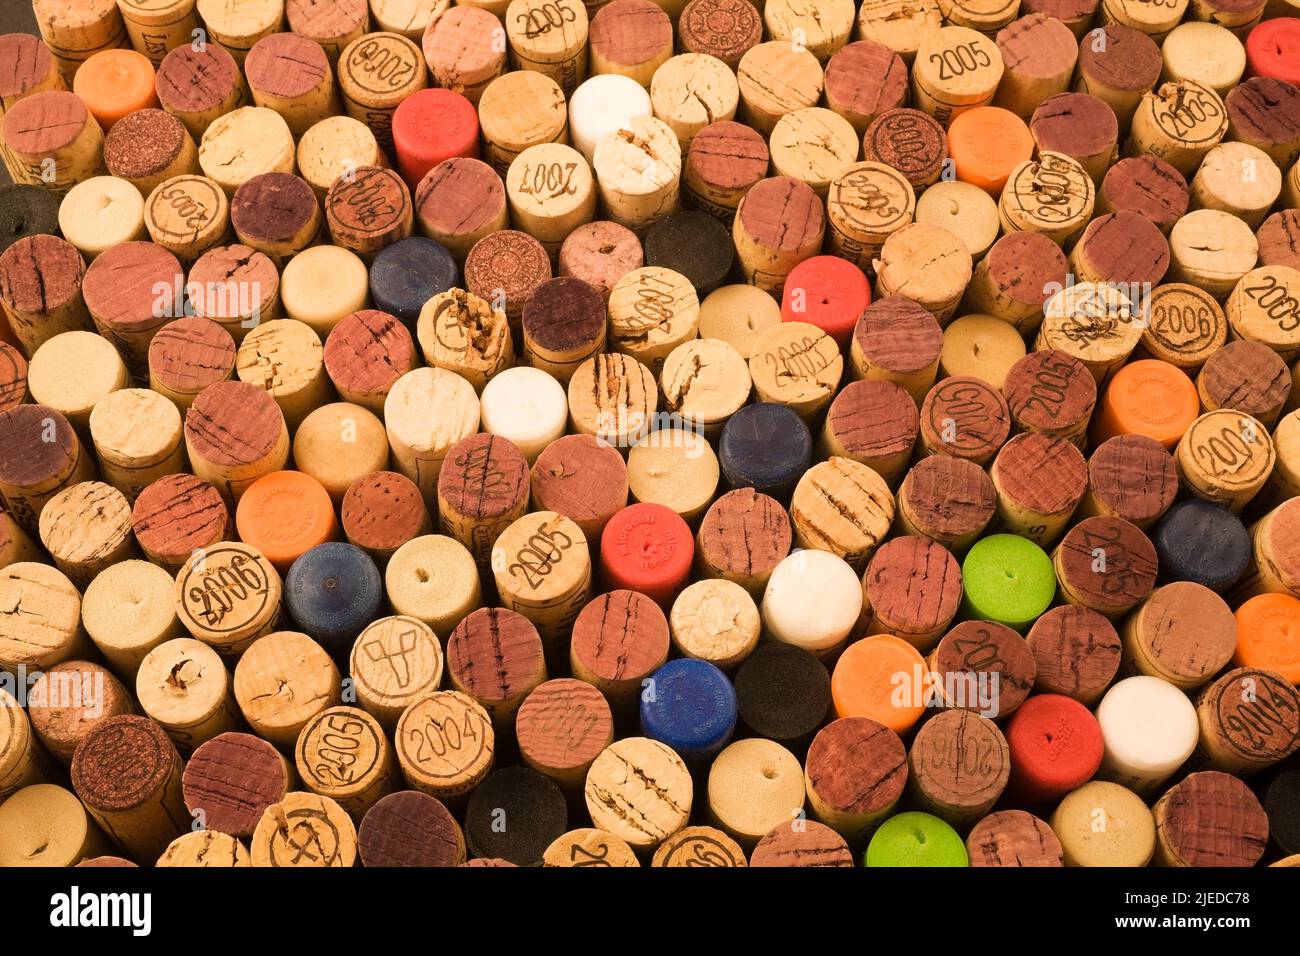 Assorted wine bottle corks. Stock Photo